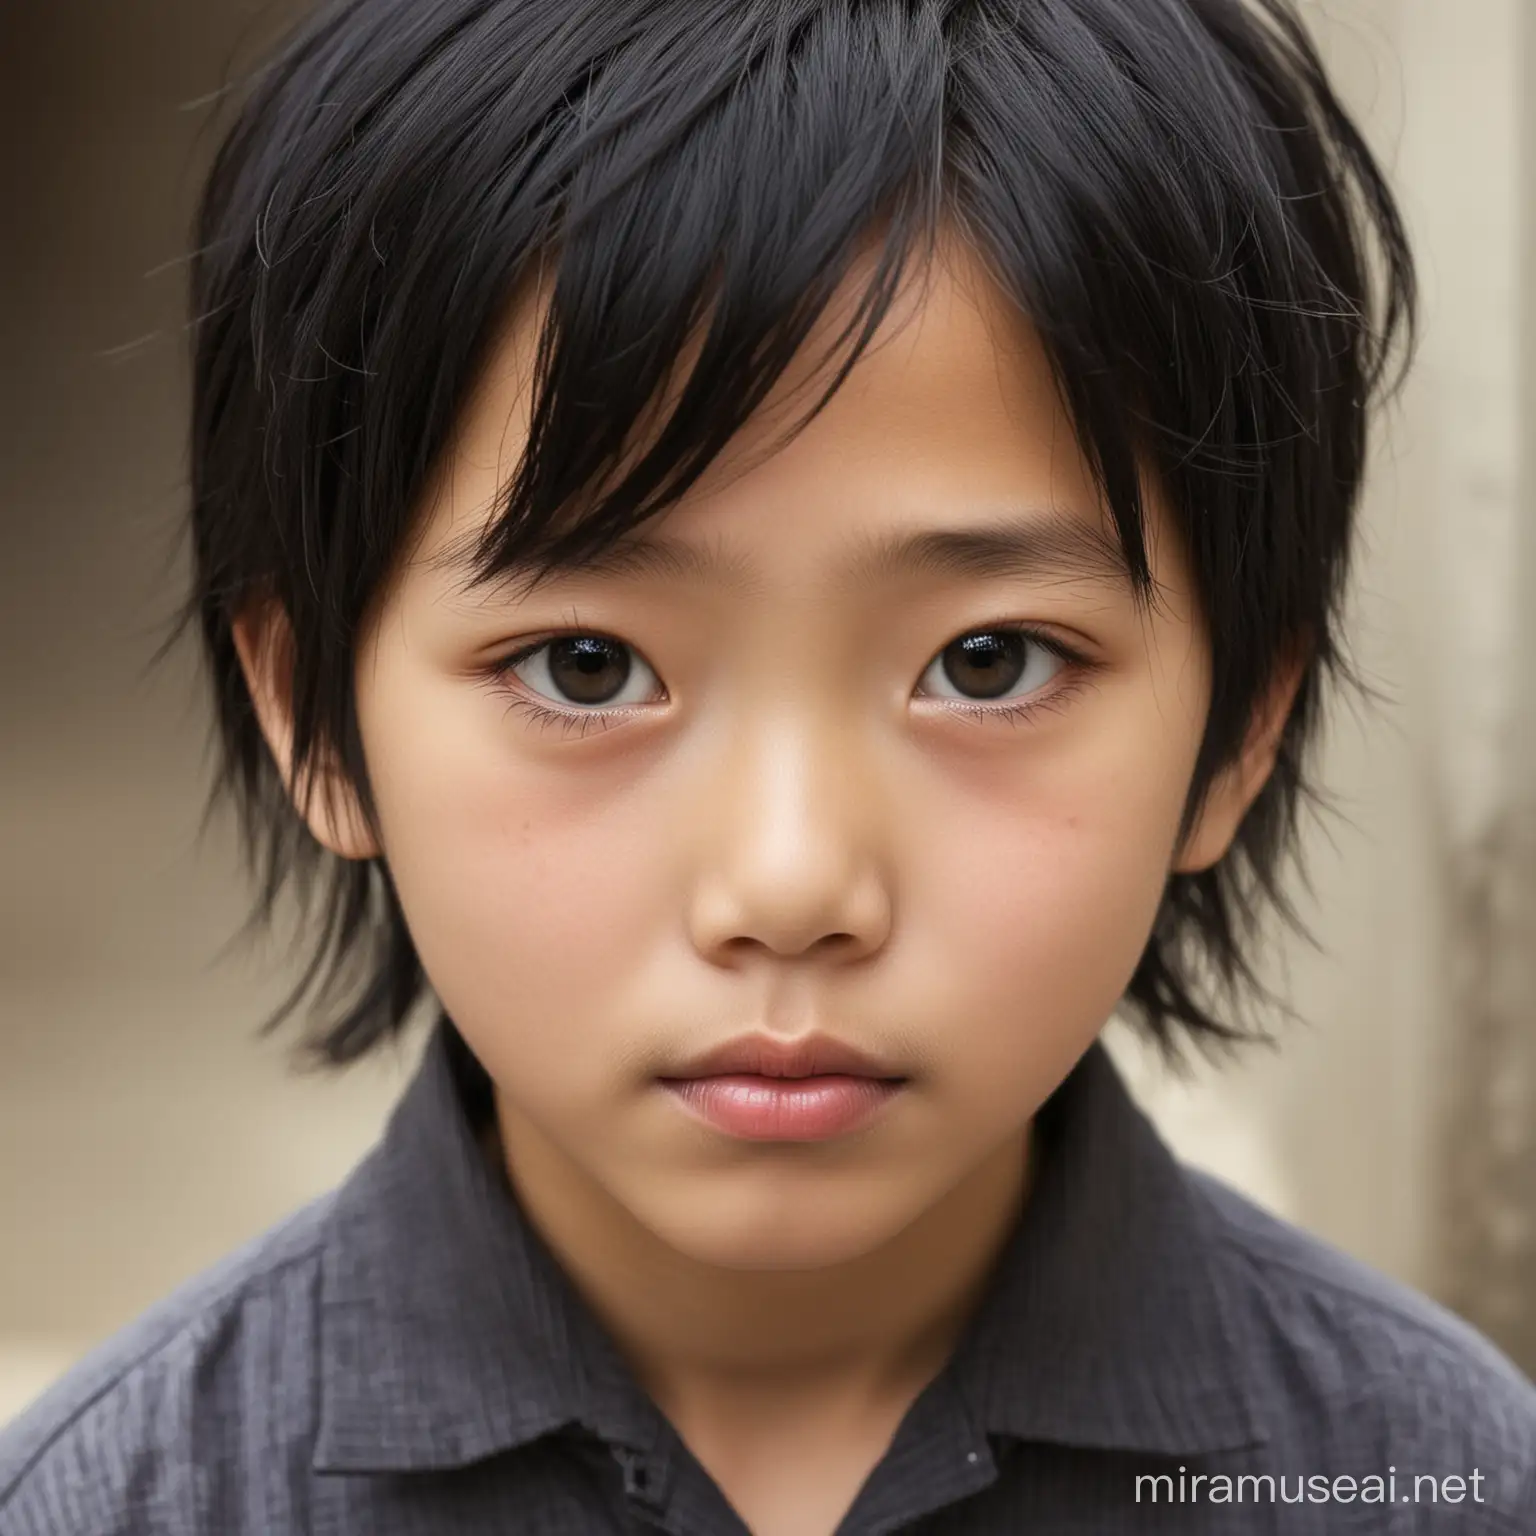 An Asian boy. He is 7 years old. He has black hair. He has white skin